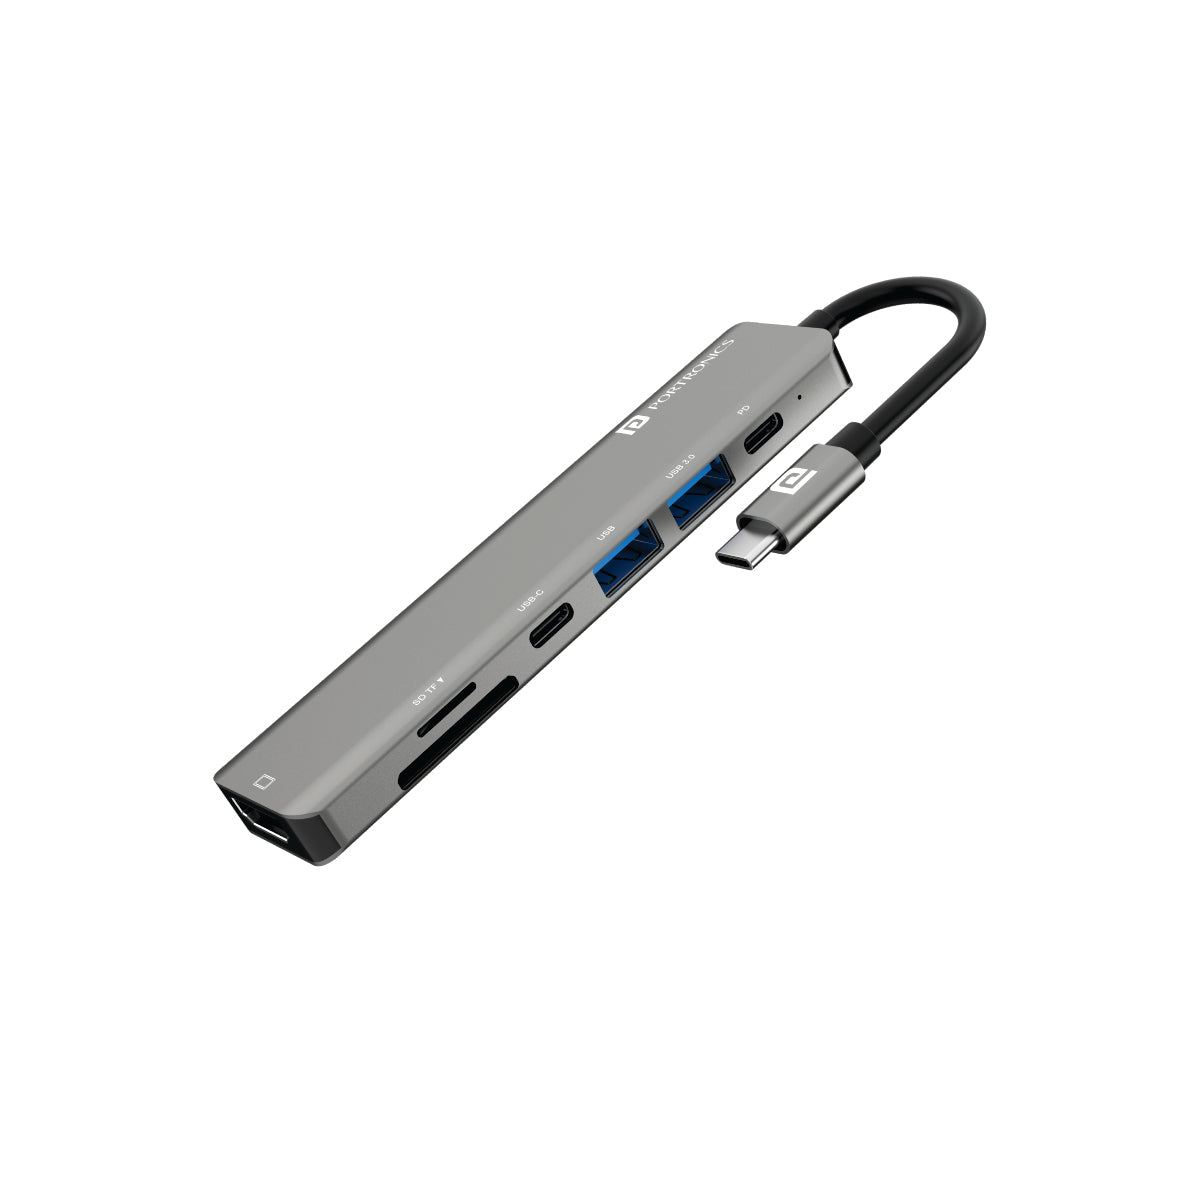  Portronics Mport 52 Multiport USB hub. Grey